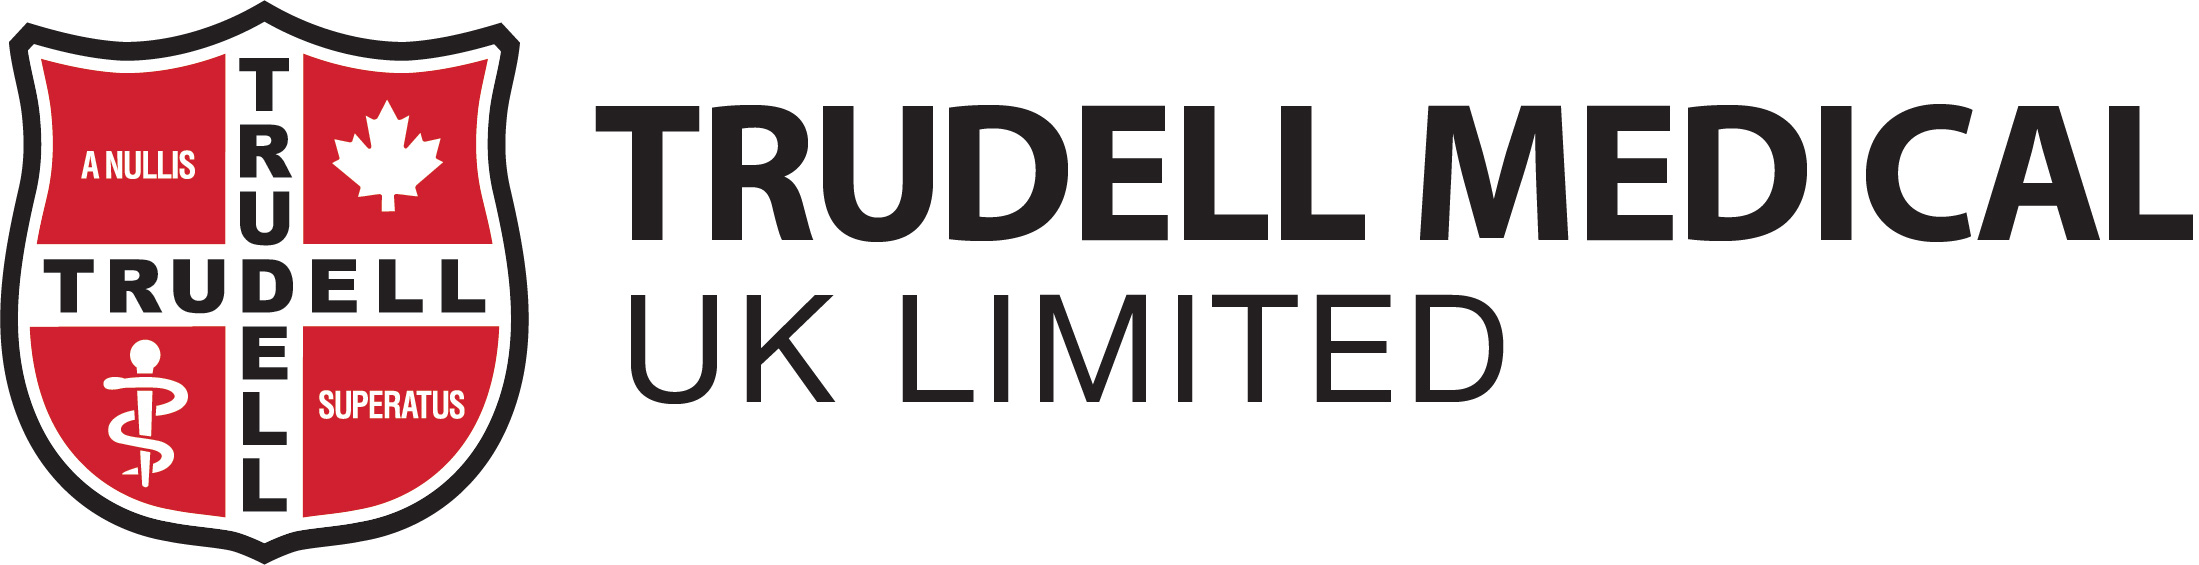 Logo for Trudell Medical UK Limited